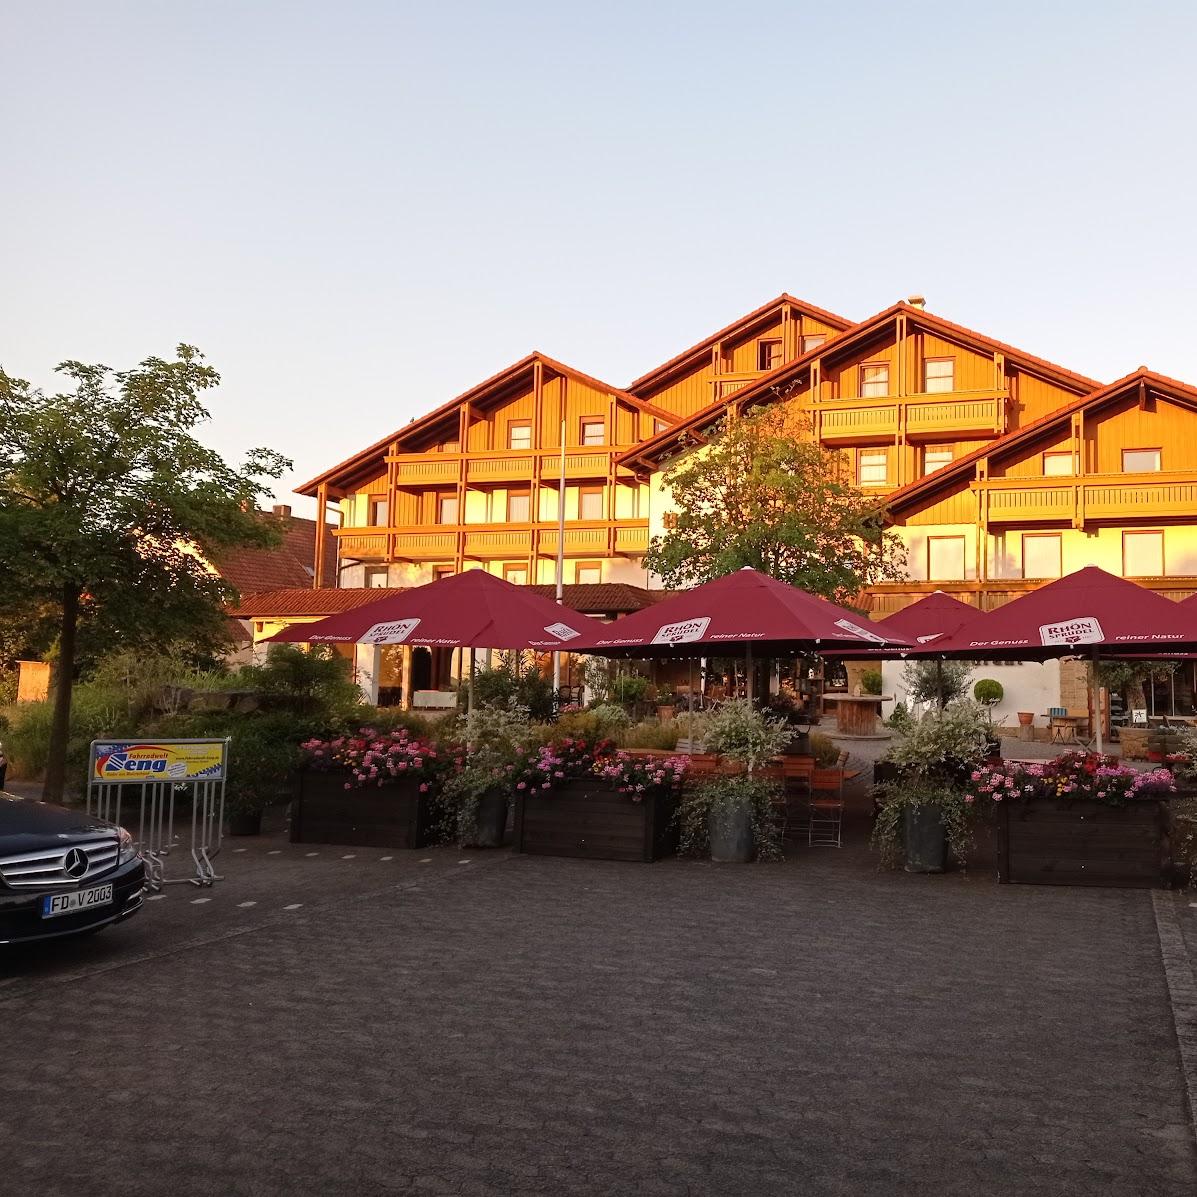 Restaurant "Hotel - Restaurant Berghof" in Petersberg